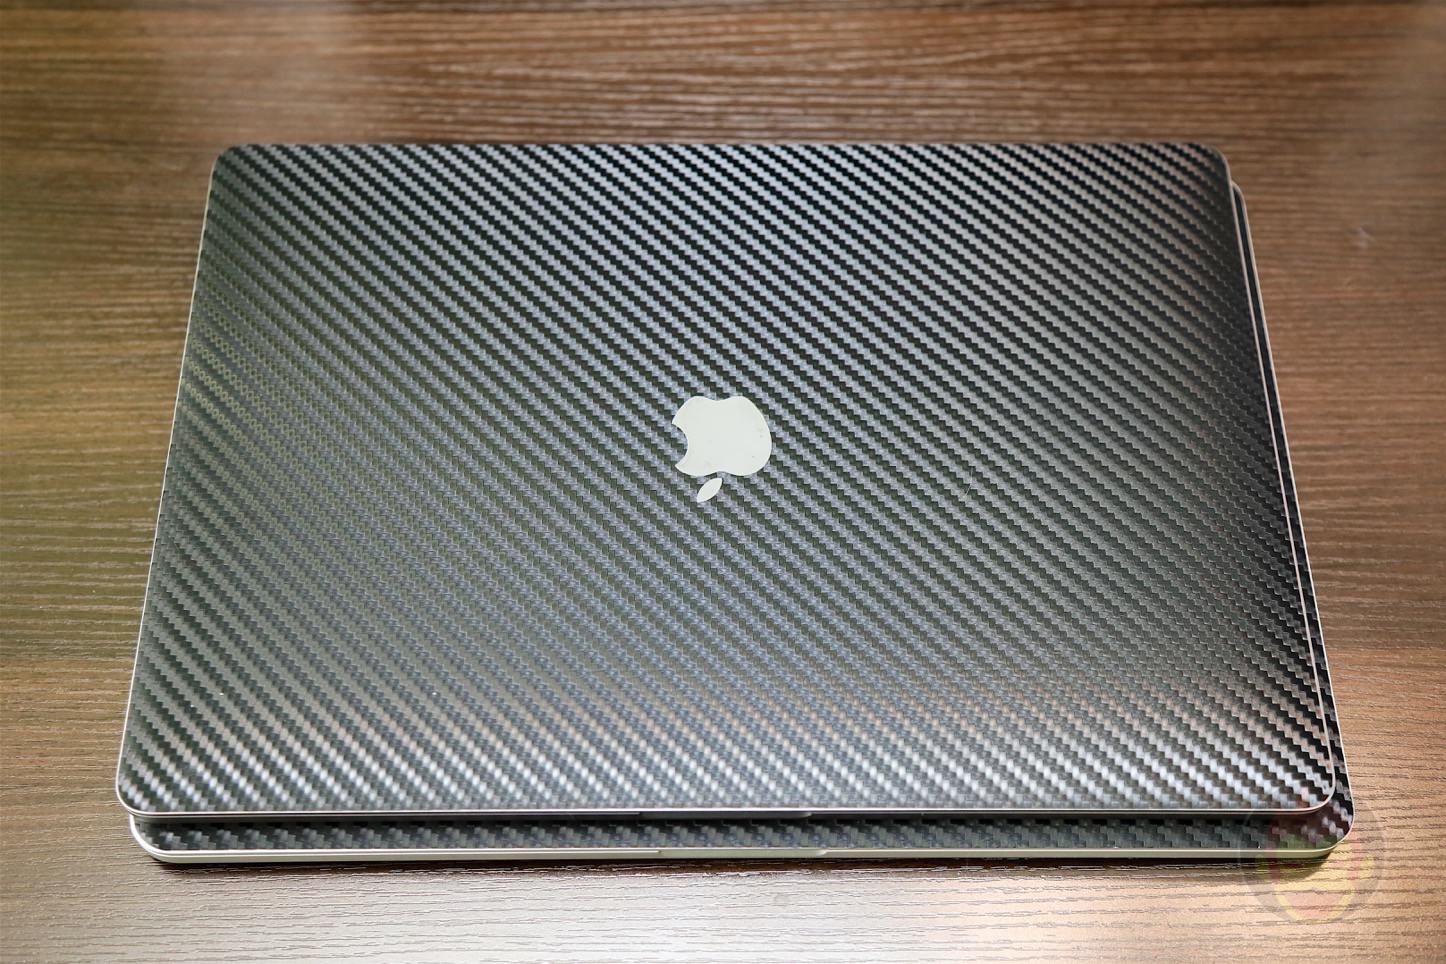 MacBook-Pro-15inch-2015-2016-comparison-16.jpg